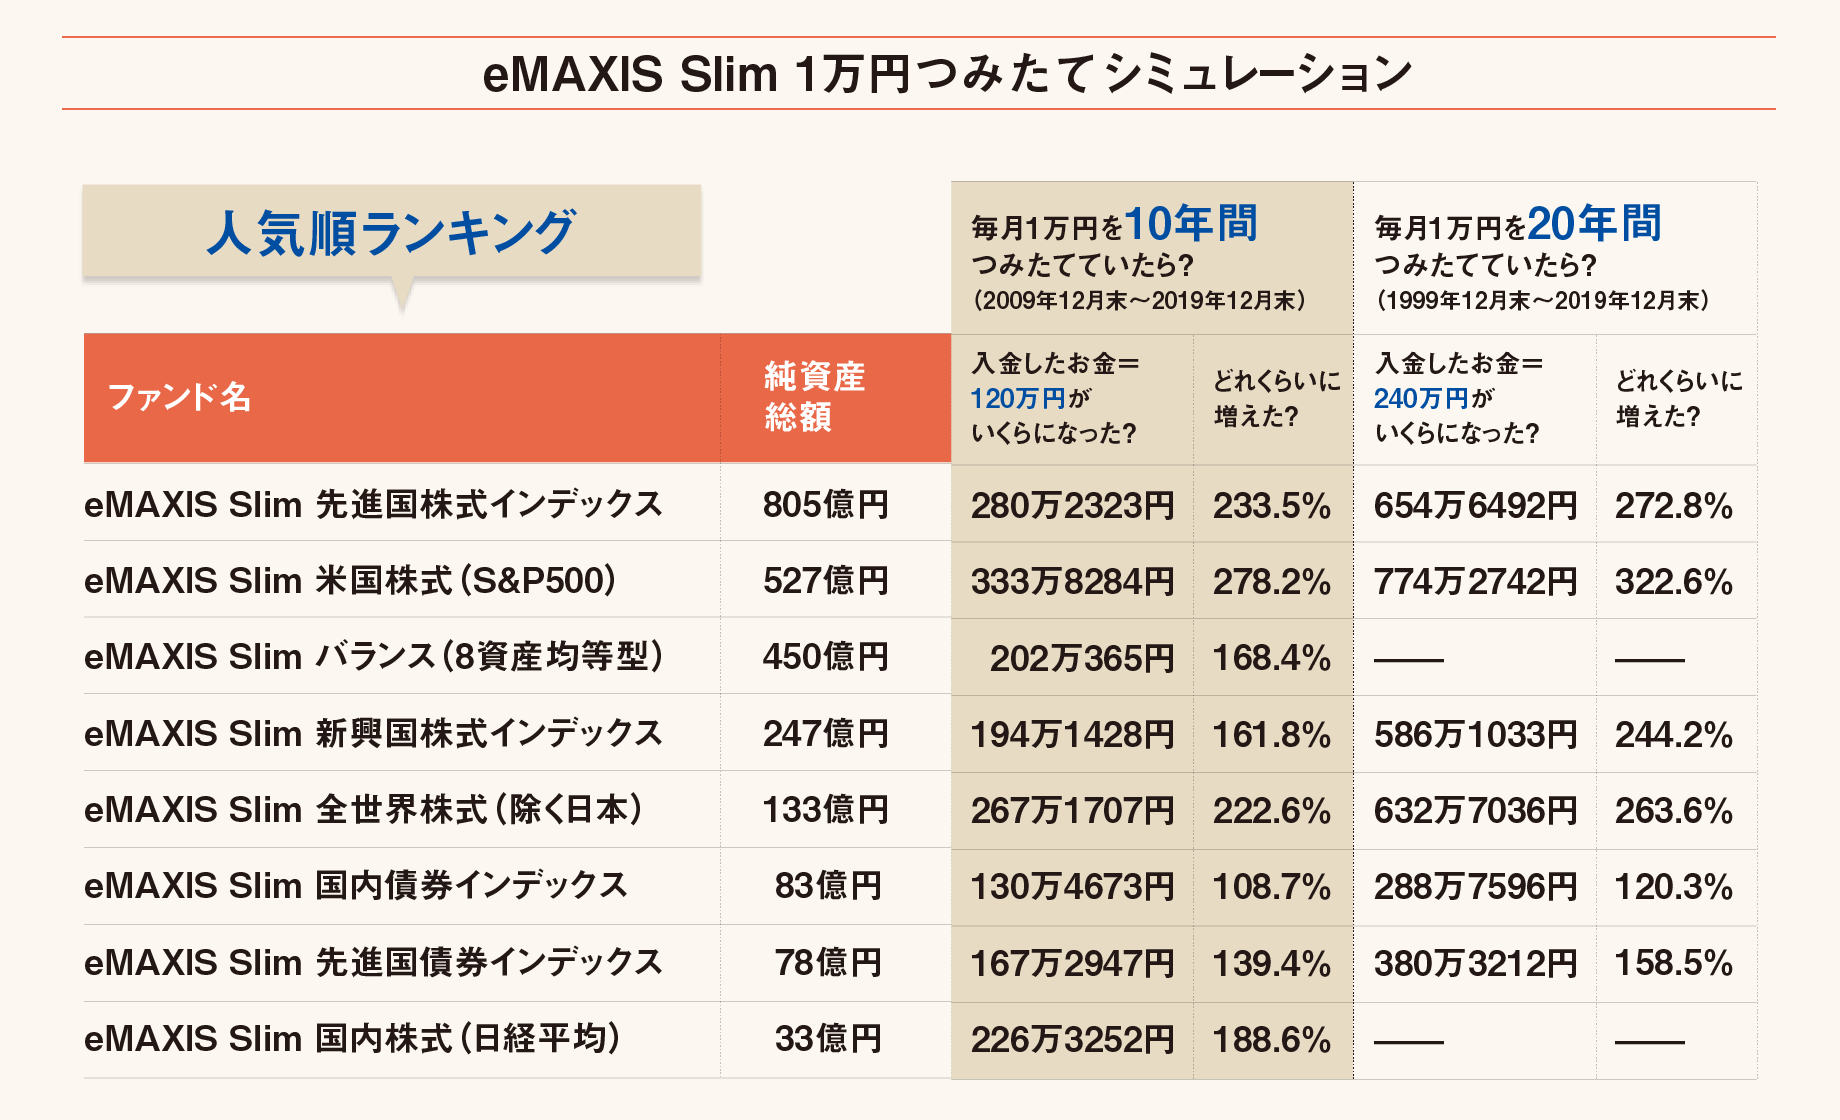 eMAXIS Slim 1万円つみたてシミュレーション